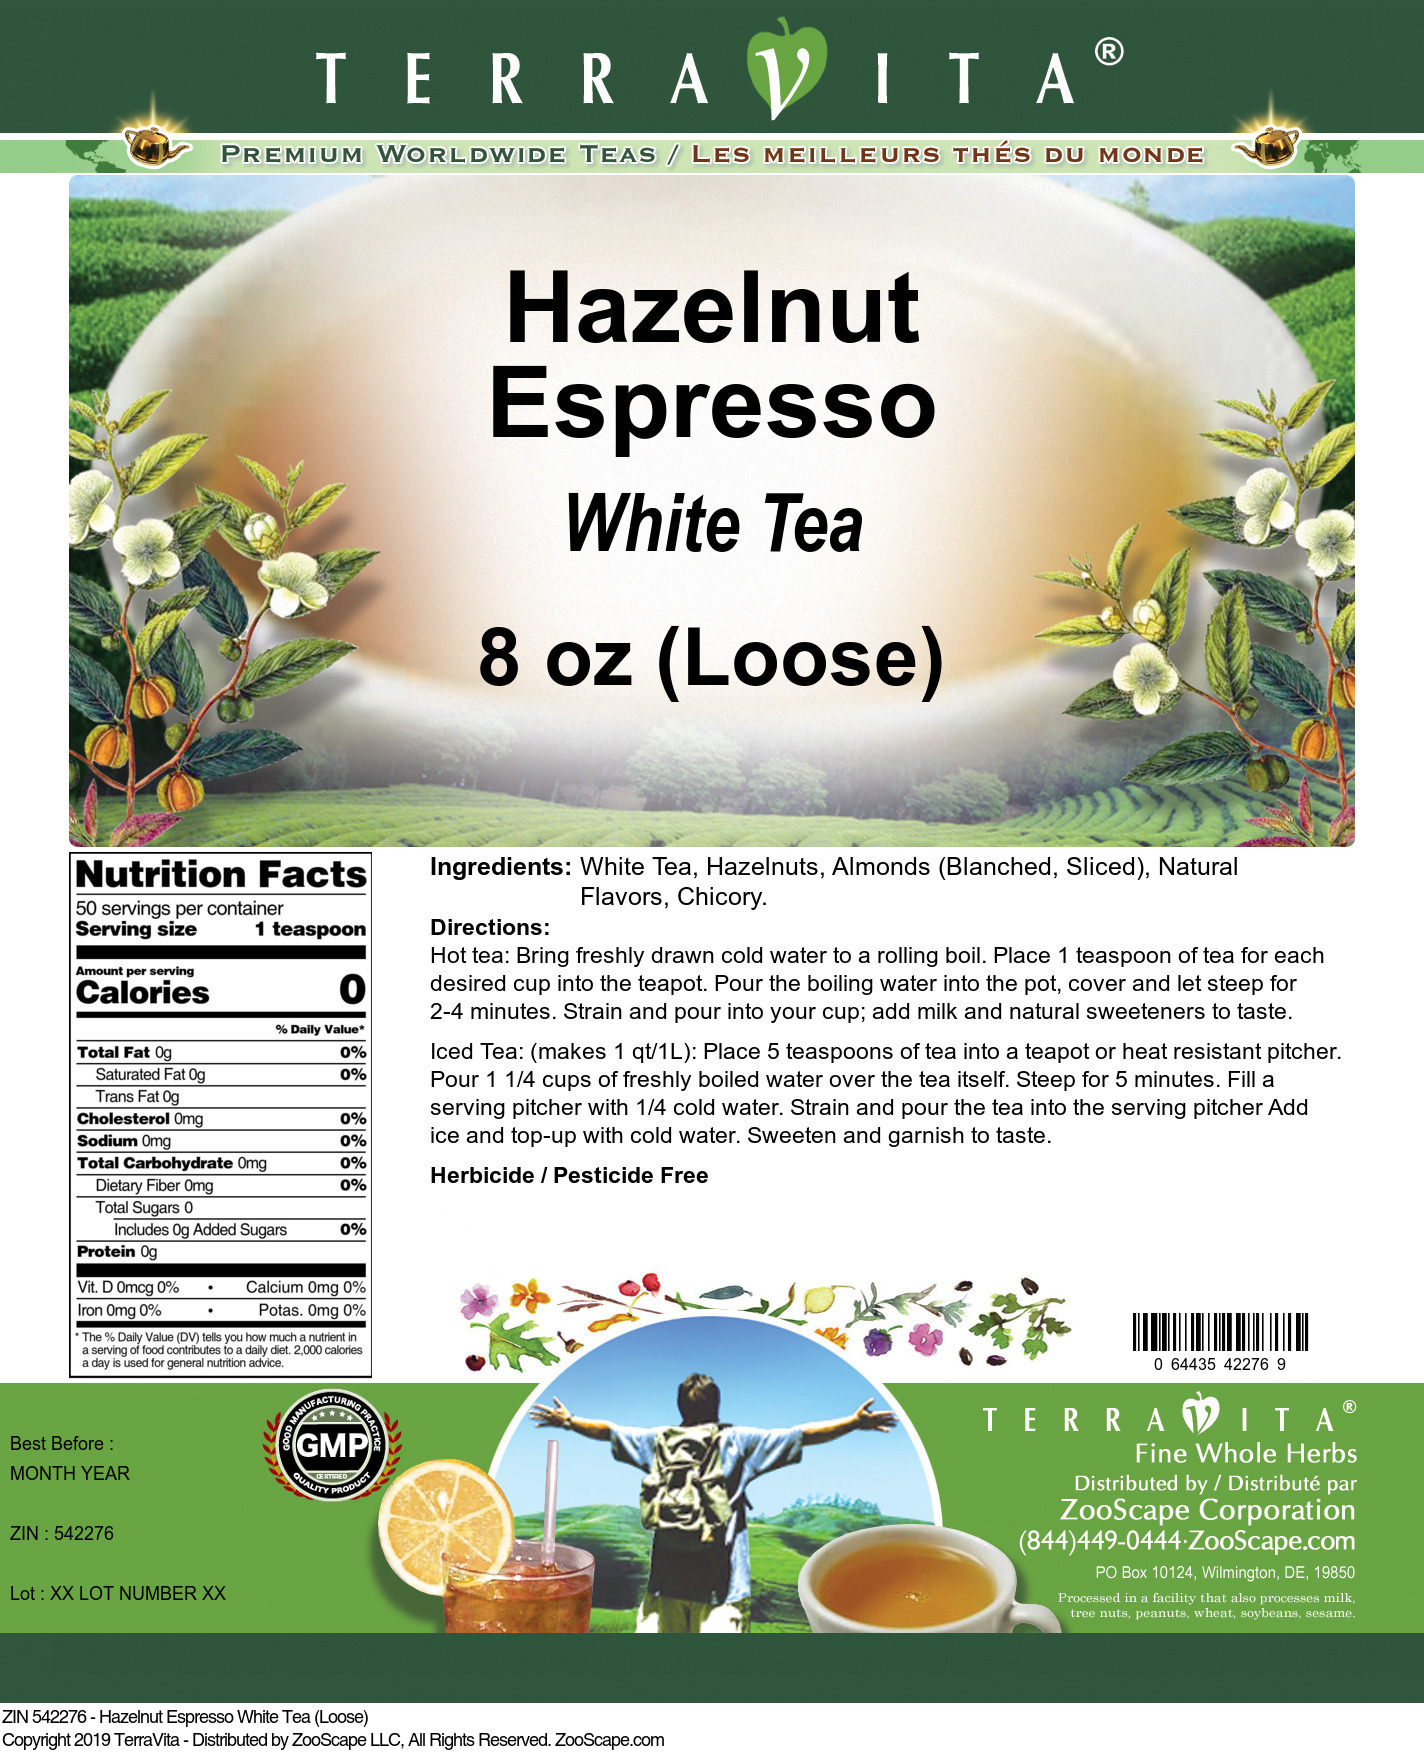 Hazelnut Espresso White Tea (Loose) - Label